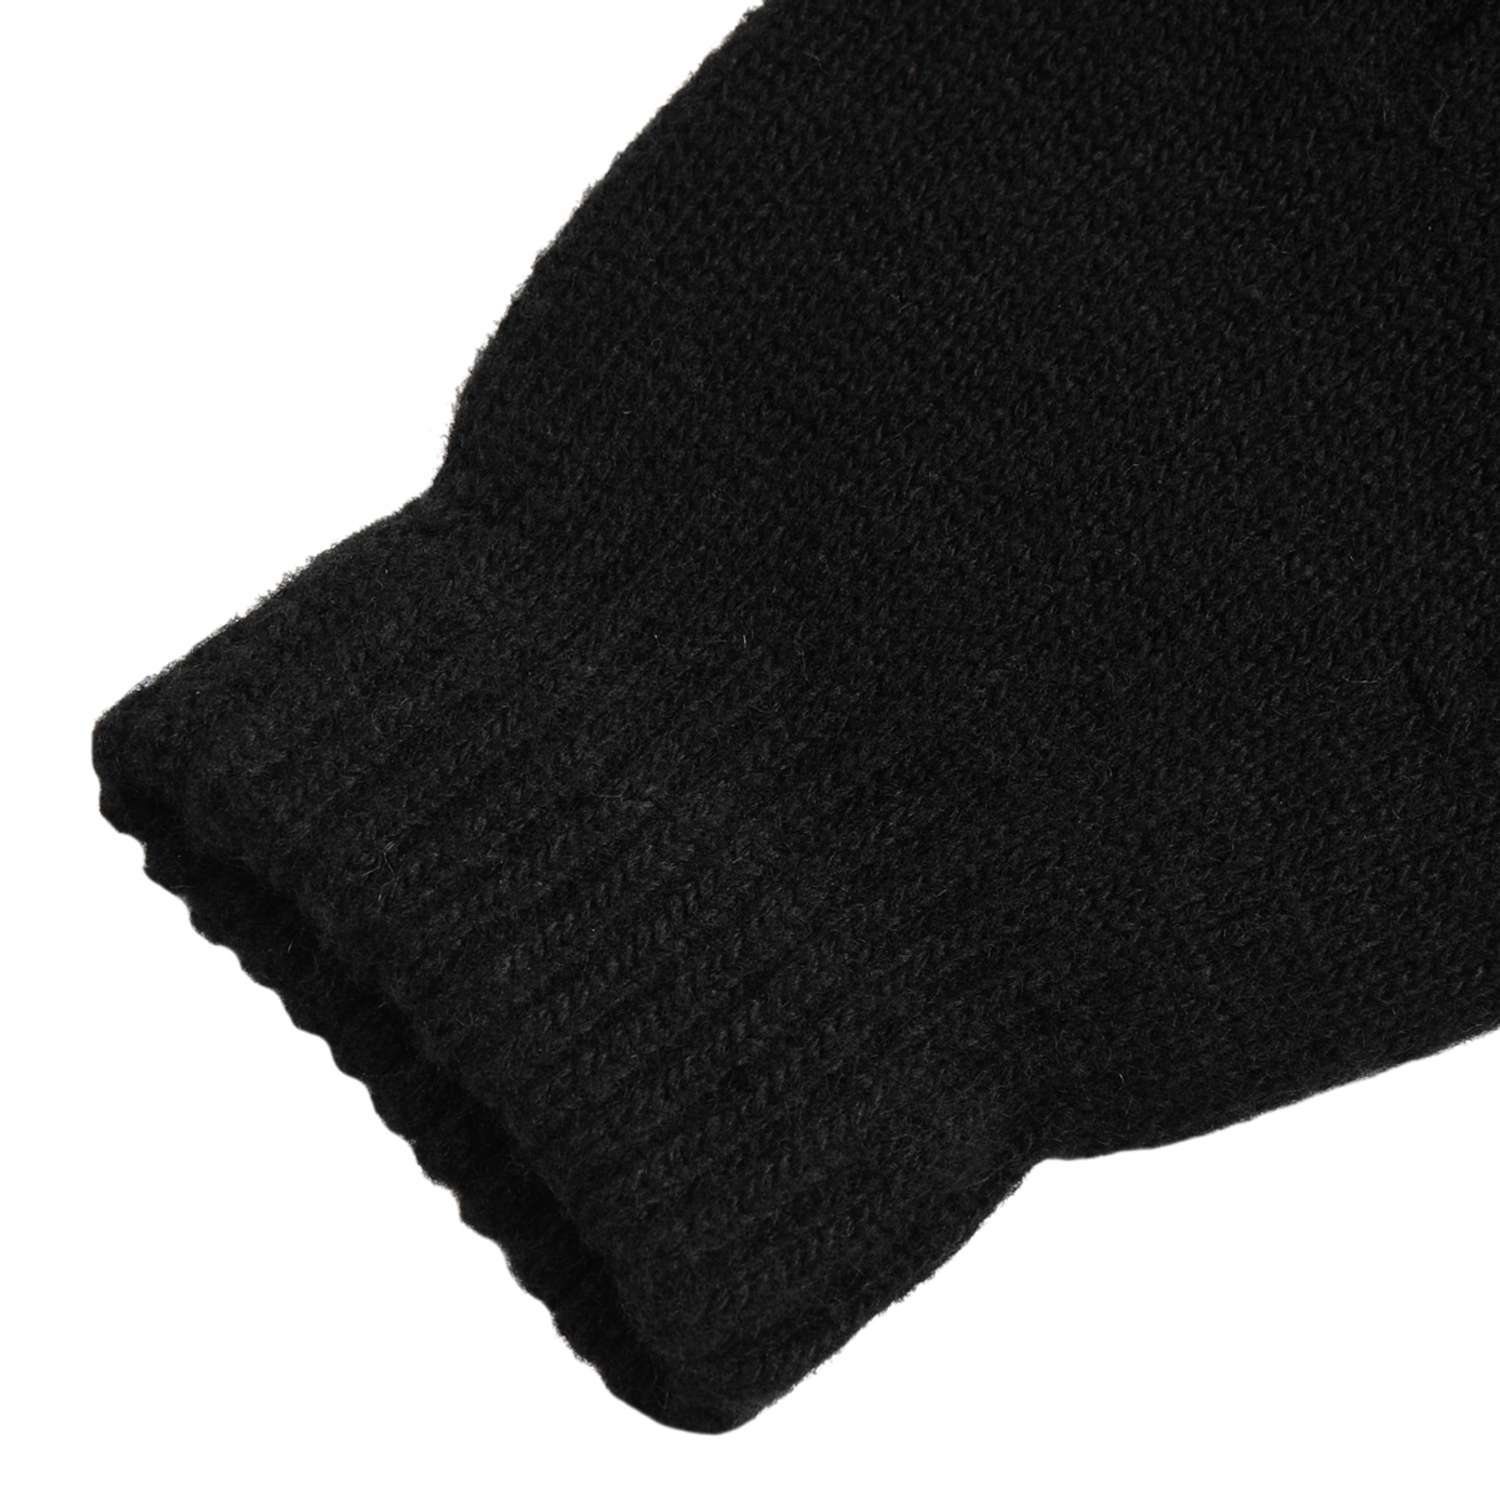 Перчатки S.gloves S 2163-M черный - фото 2